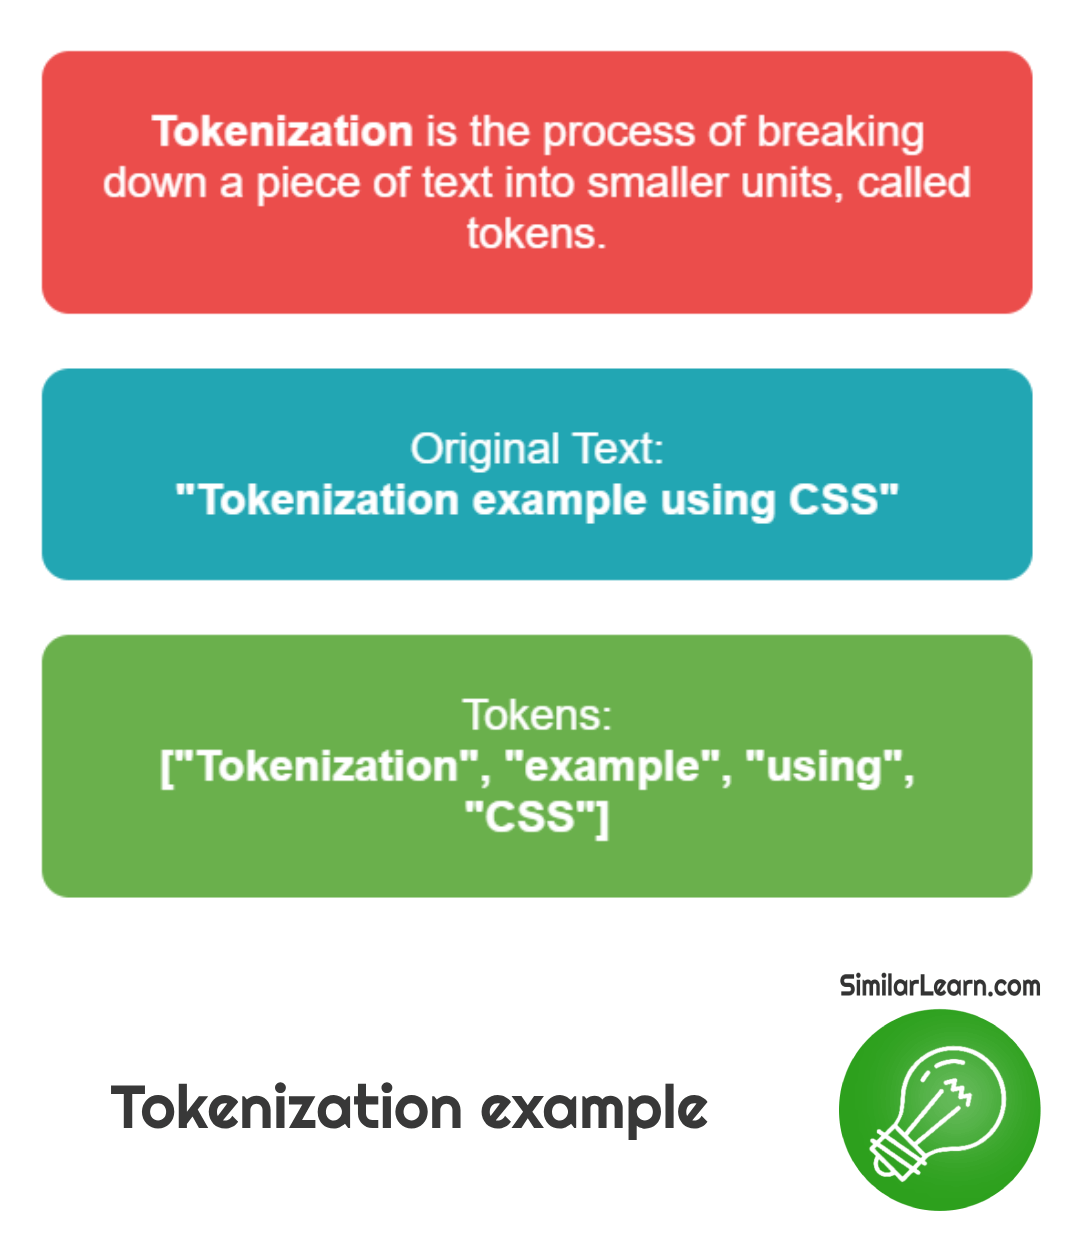 tokenization example